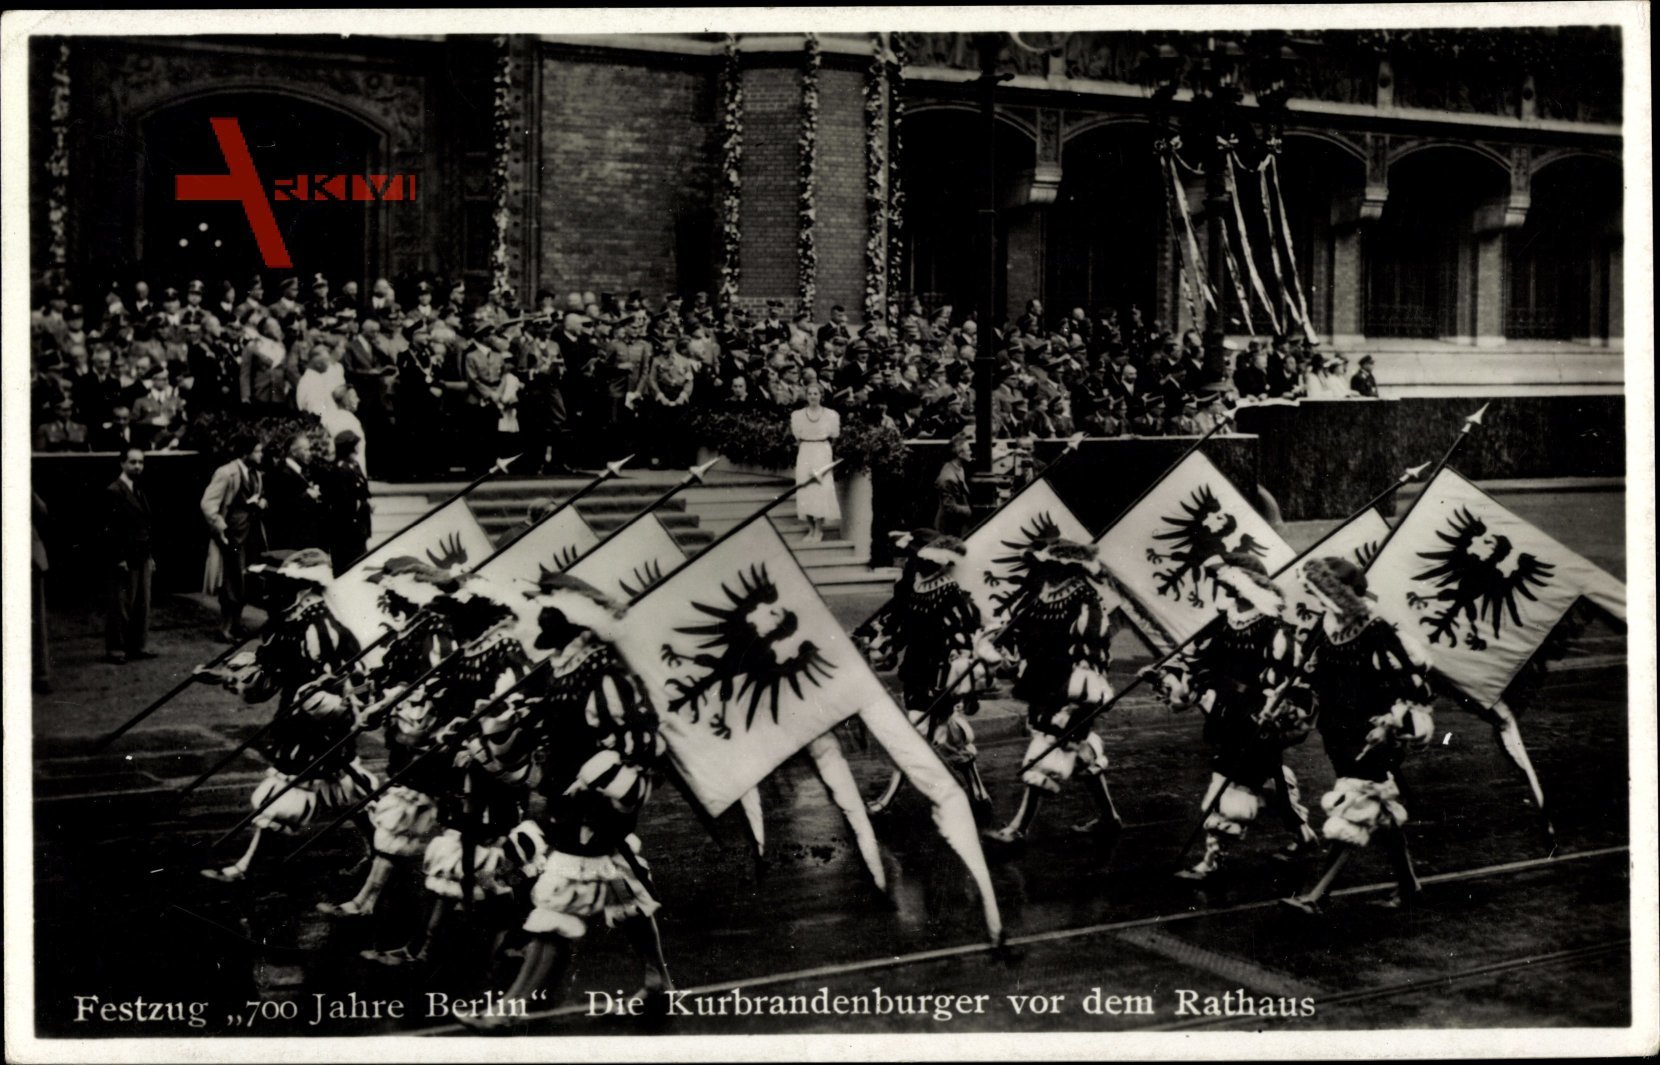 Berlin, Festzug 700 Jahre Berlin, Kurbrandenburger vor dem Rathaus